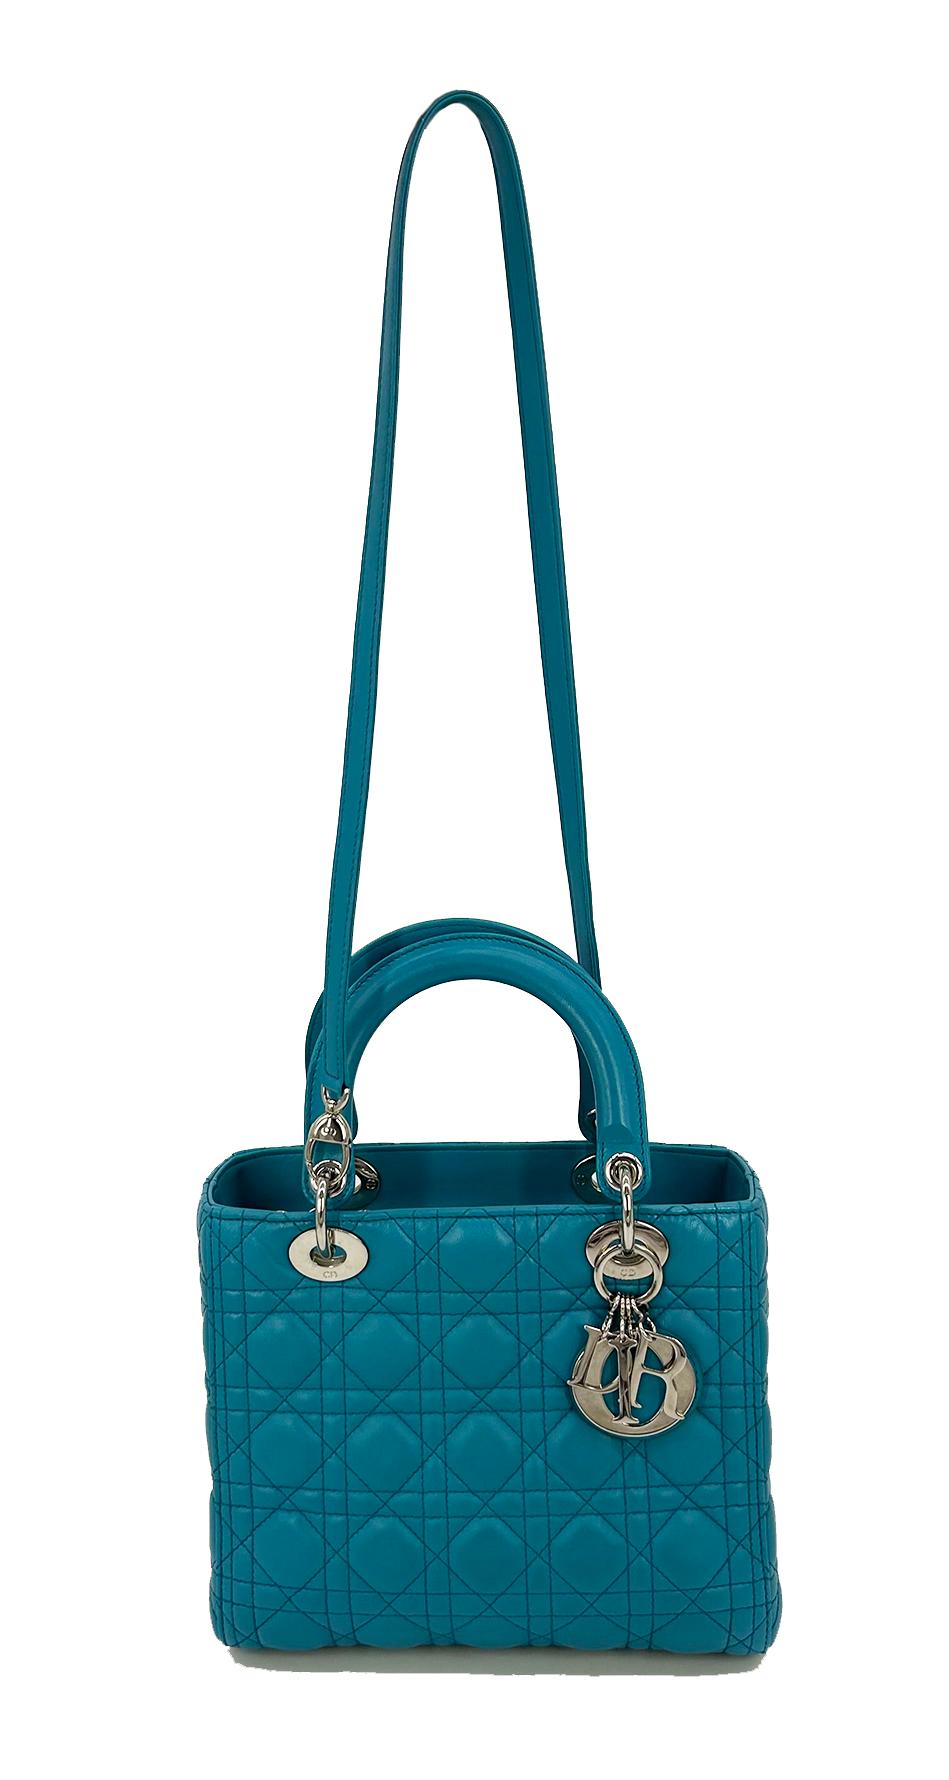 Christian Dior Teal Leather Cannage Medium Lady Di Bag For Sale 10